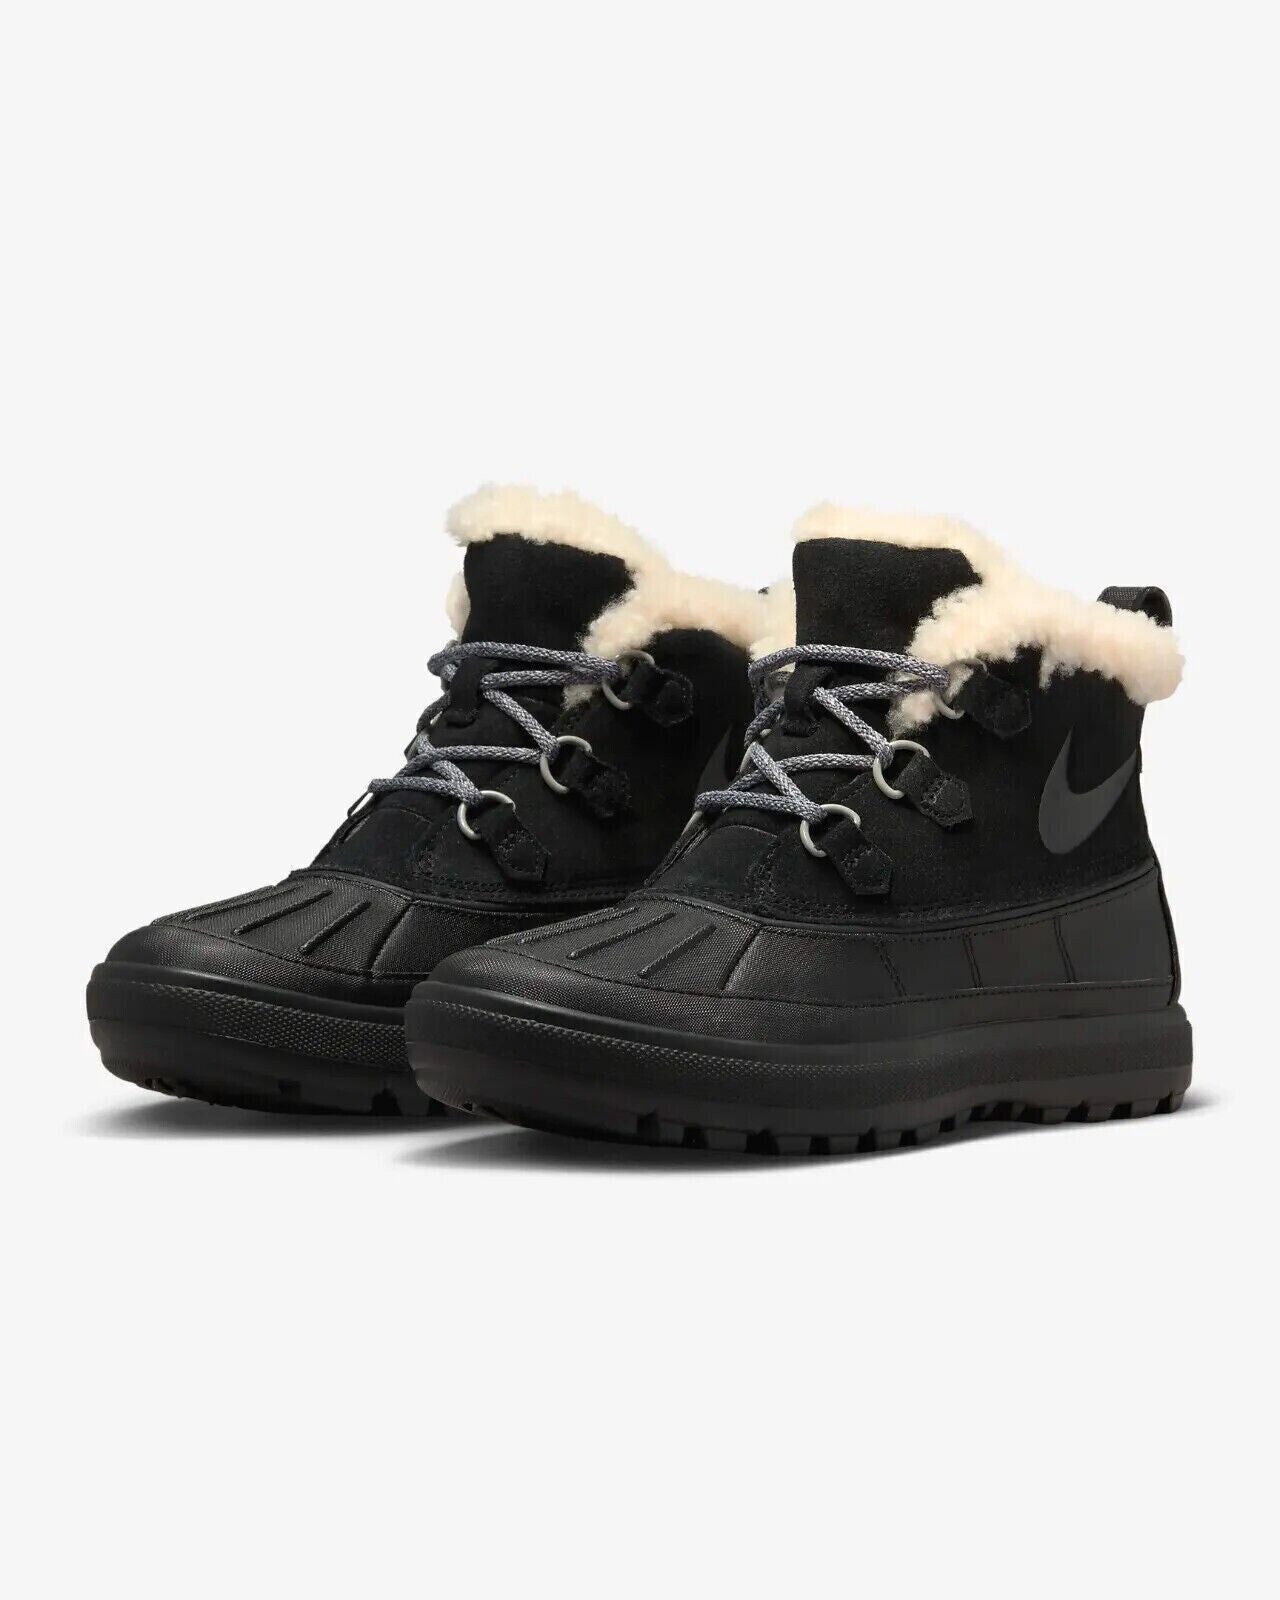 Shop Nike Woodside Chukka 2 537345-001 Women Black Anthracite Waterproof Boots Ref179